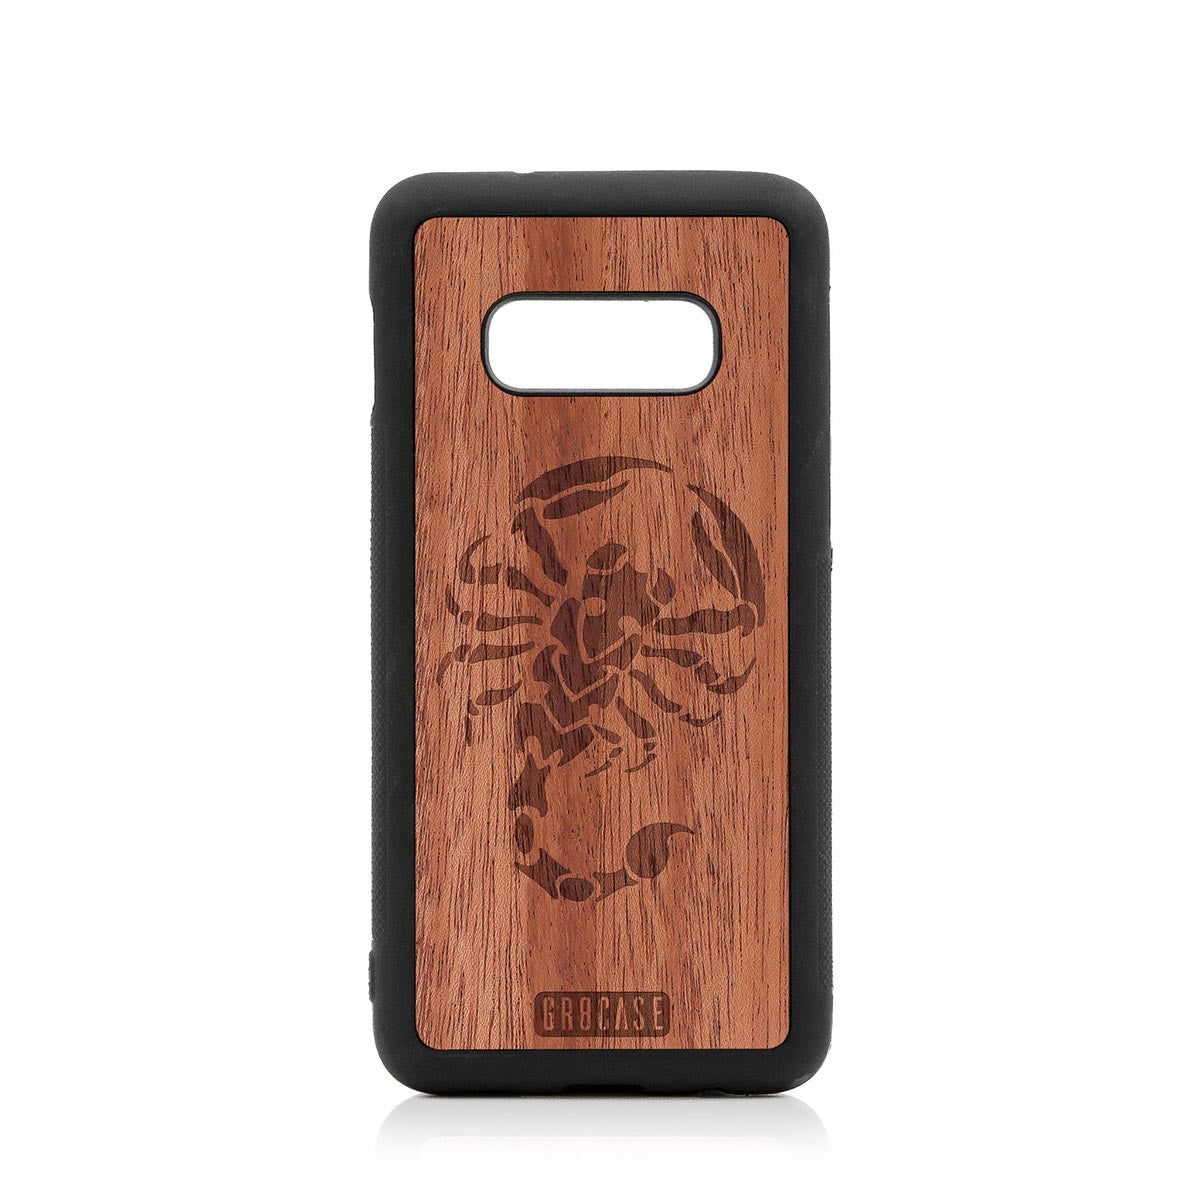 Scorpion Design Wood Case Samsung Galaxy S10E by GR8CASE